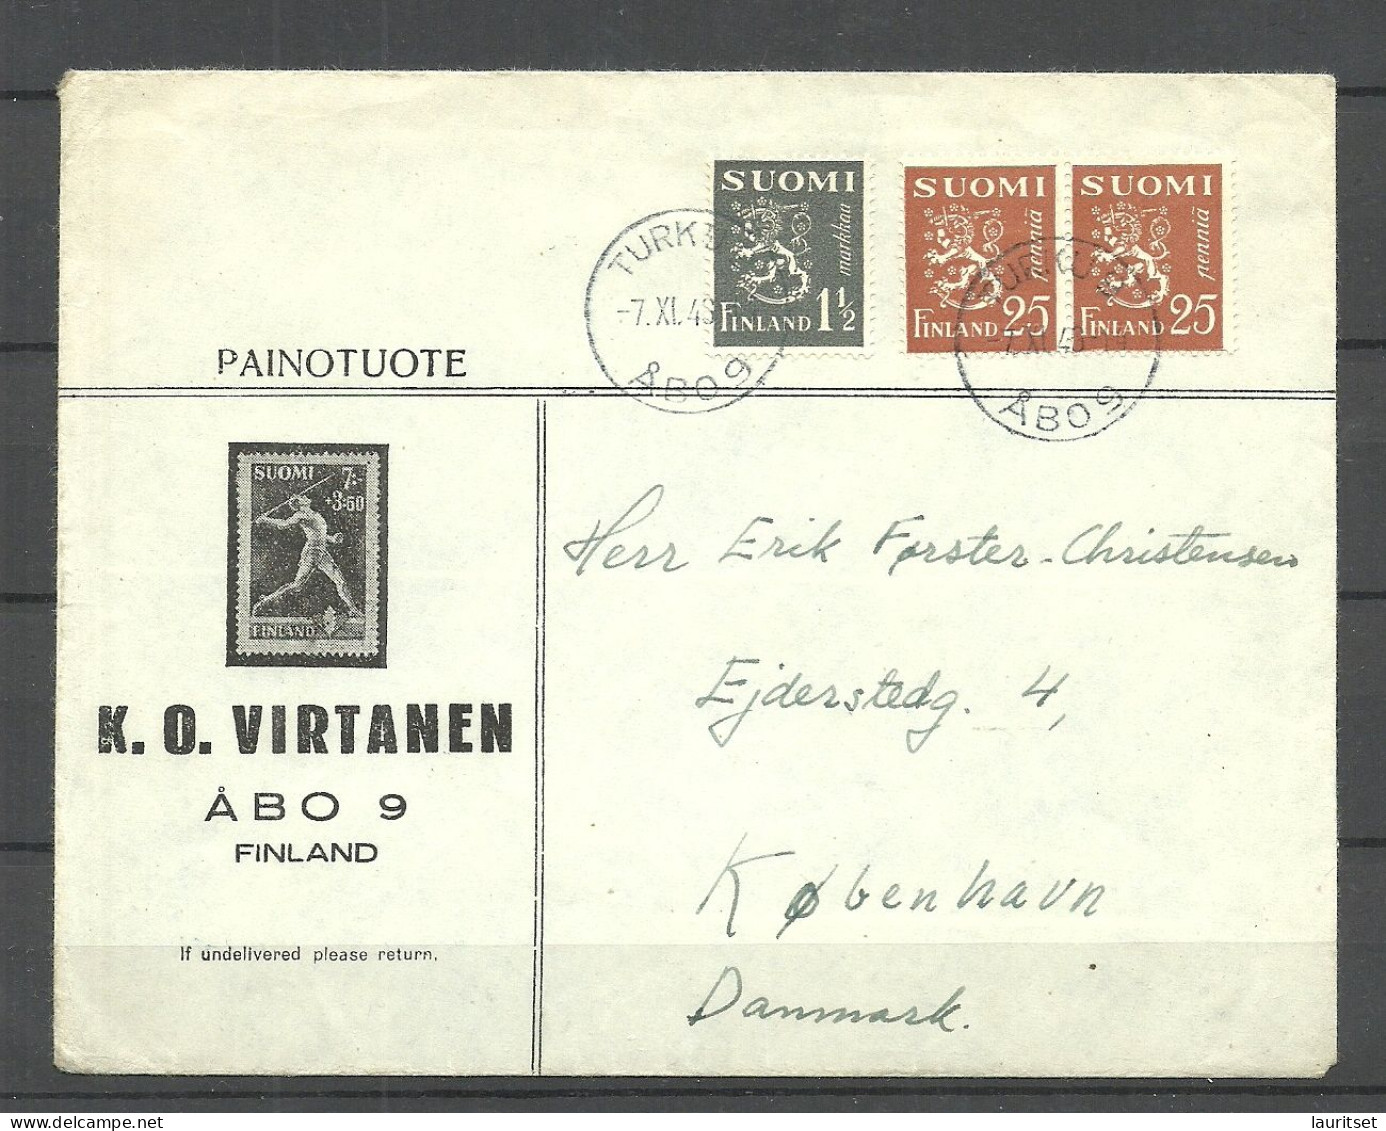 FINLAND FINNLAND Suomi 1948 O Turku 9 Commercial Cover Printed Matter To Denmark - Cartas & Documentos